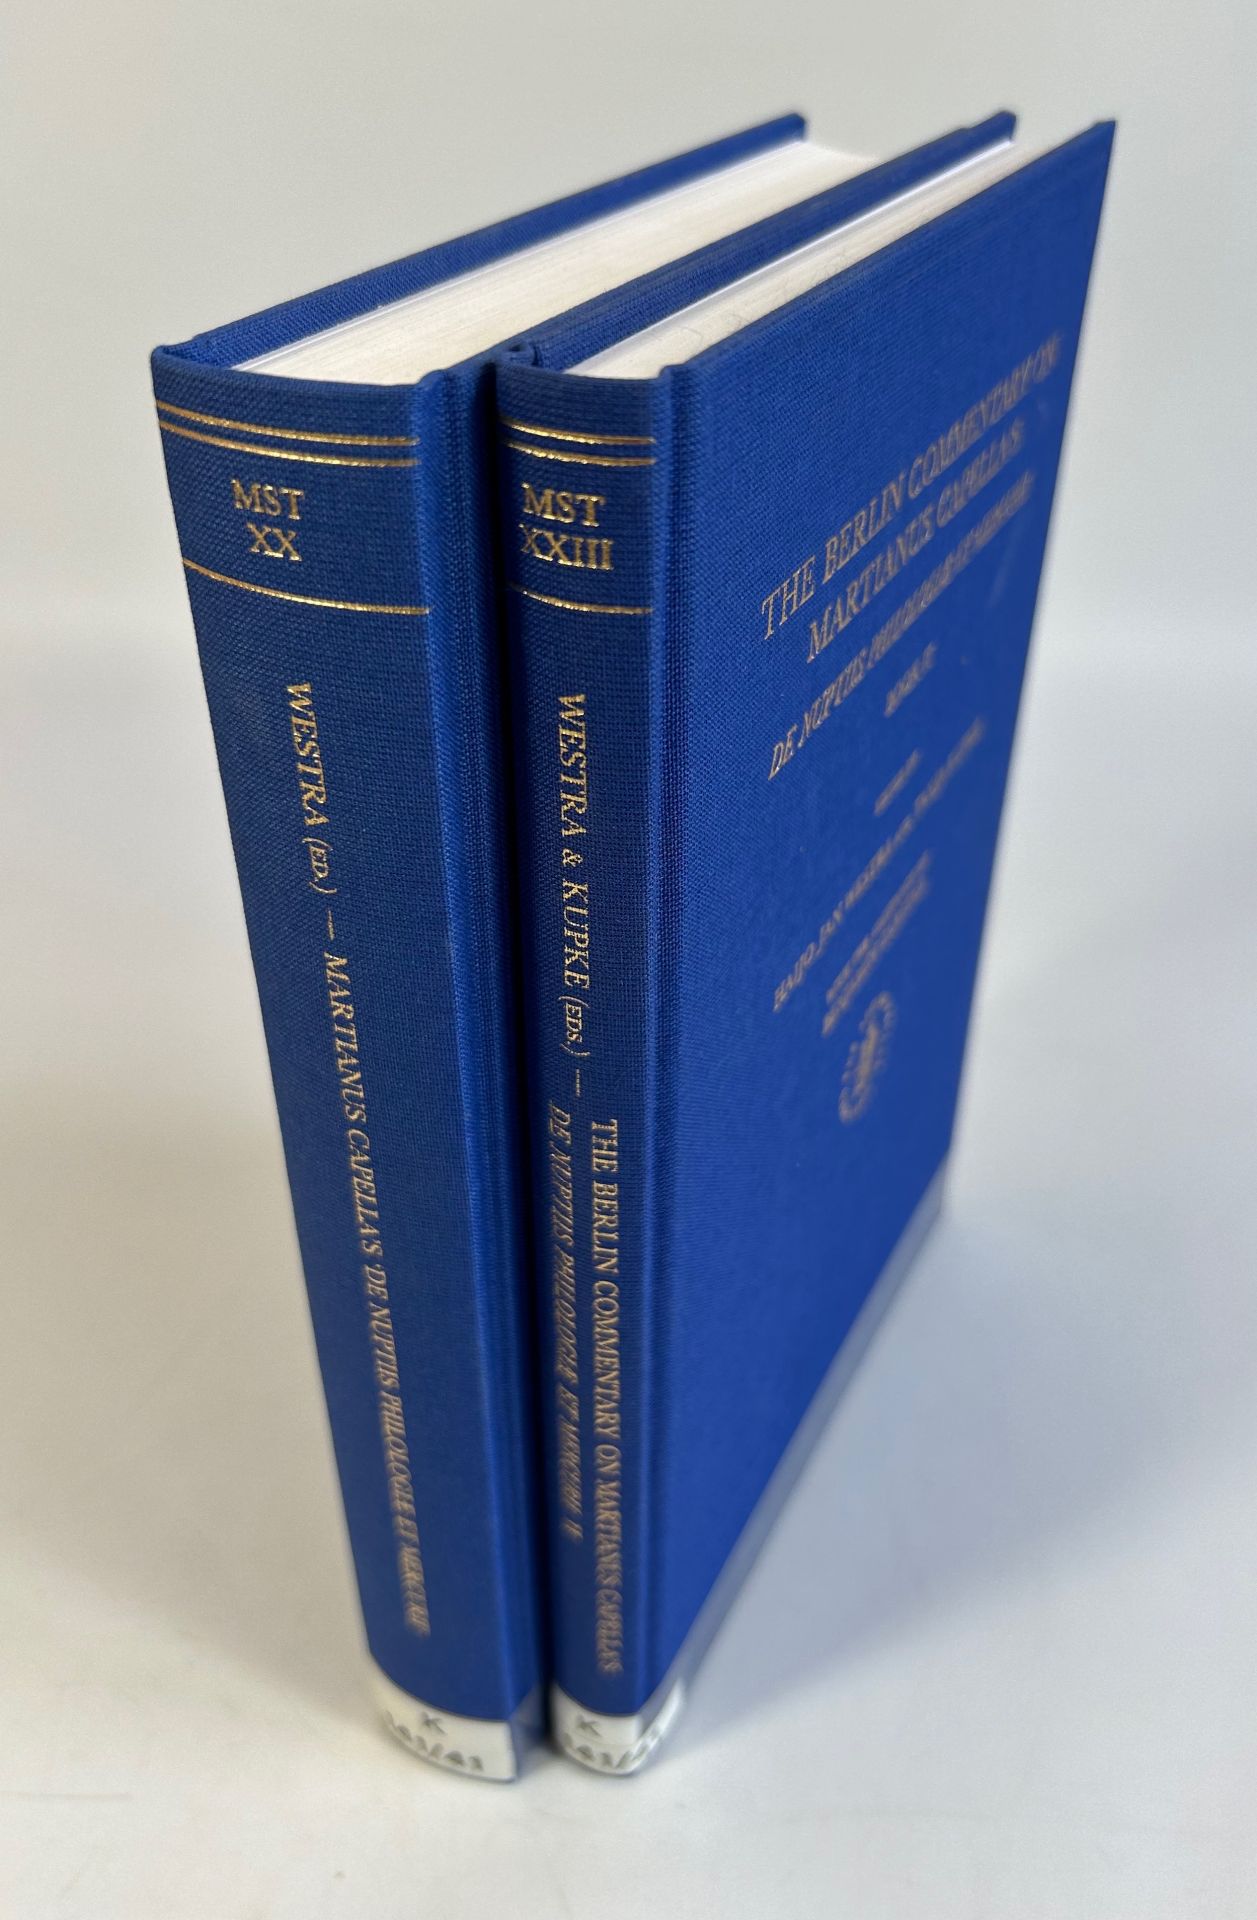 The Berlin commentary on Martianus Capella's De nuptiis Philologiae et Mercurii. Book I and II. Zwei Bände. (= Mittellateinische Studien und Texte, Band XX u. XXIII). - Westra, Haijo Jan (Ed.) und Tanja (Ed.) Kupke